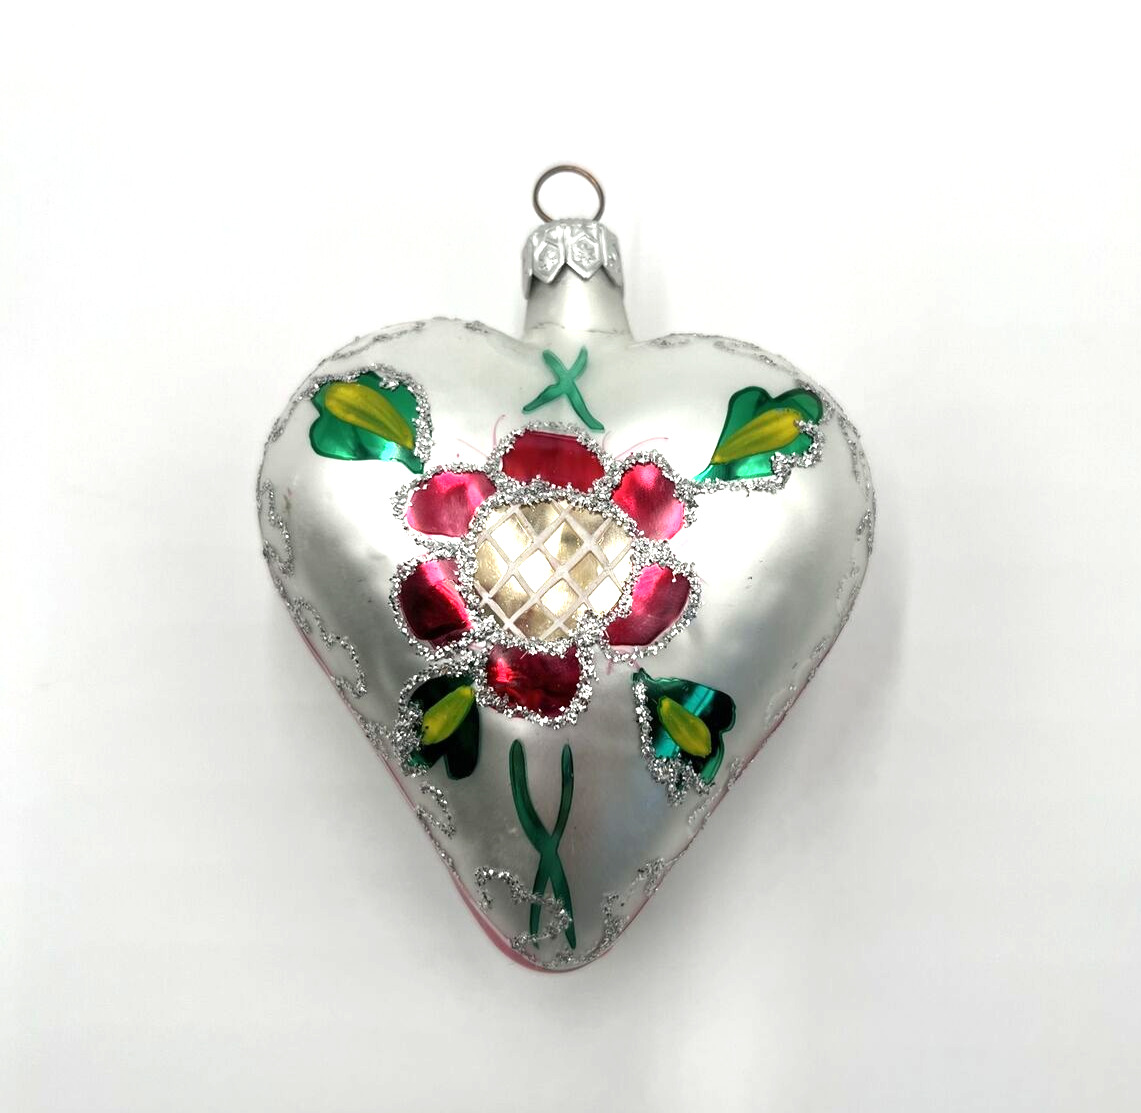 Vintage Blown Glass Christmas Ornament Heart Shape with Flower Floral Design